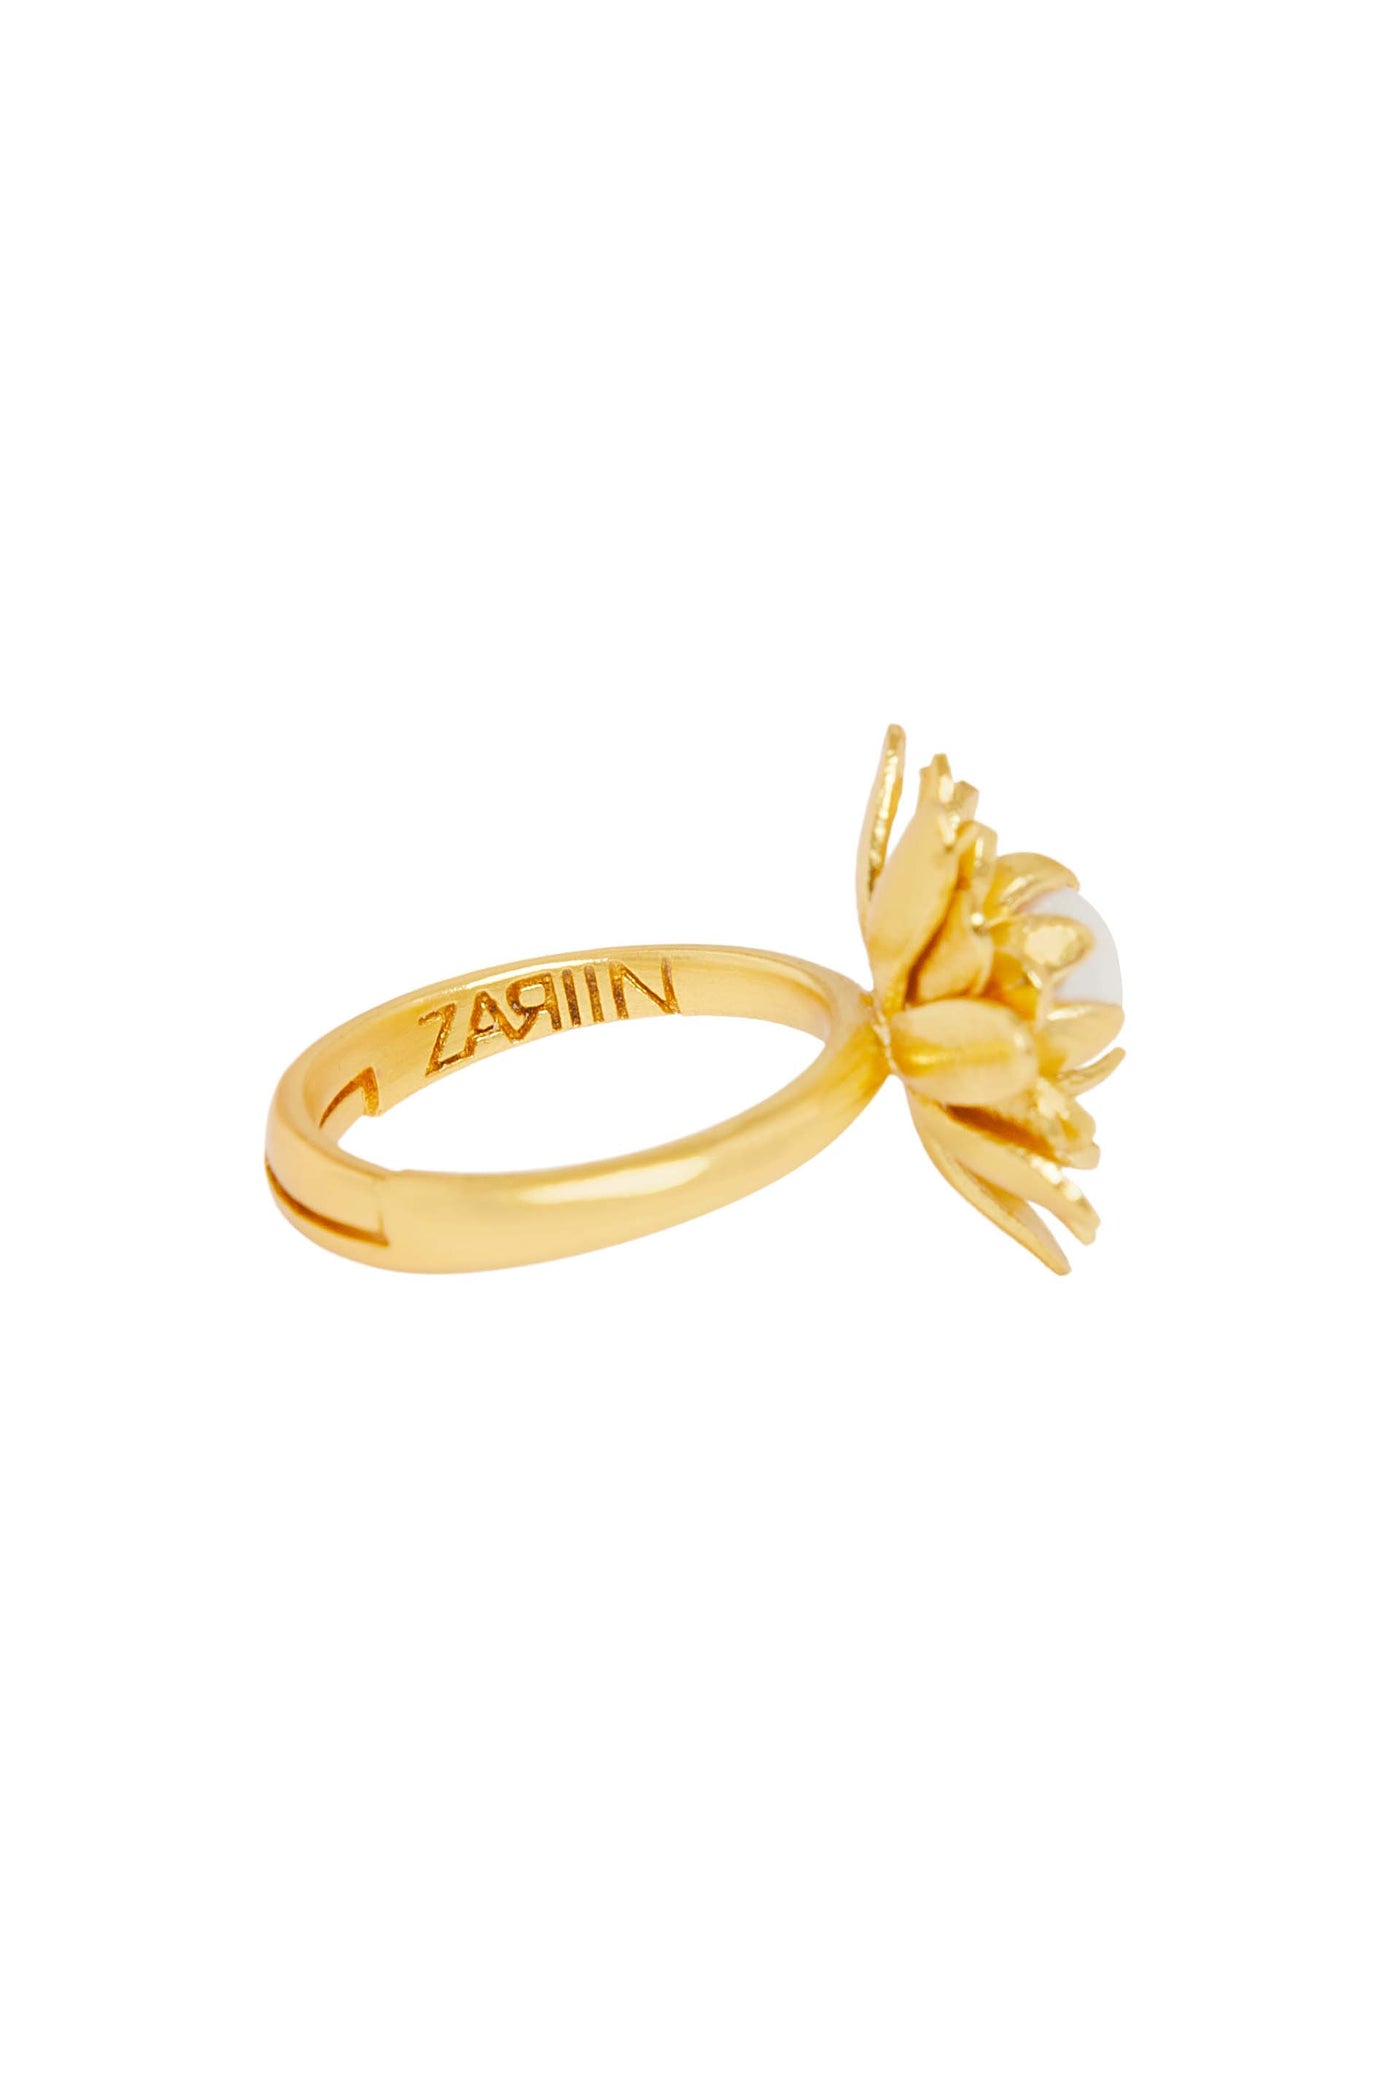 Zariin Jasmine’s Delight Ring gold fashion jewellery online shopping melange singapore indian designer wear